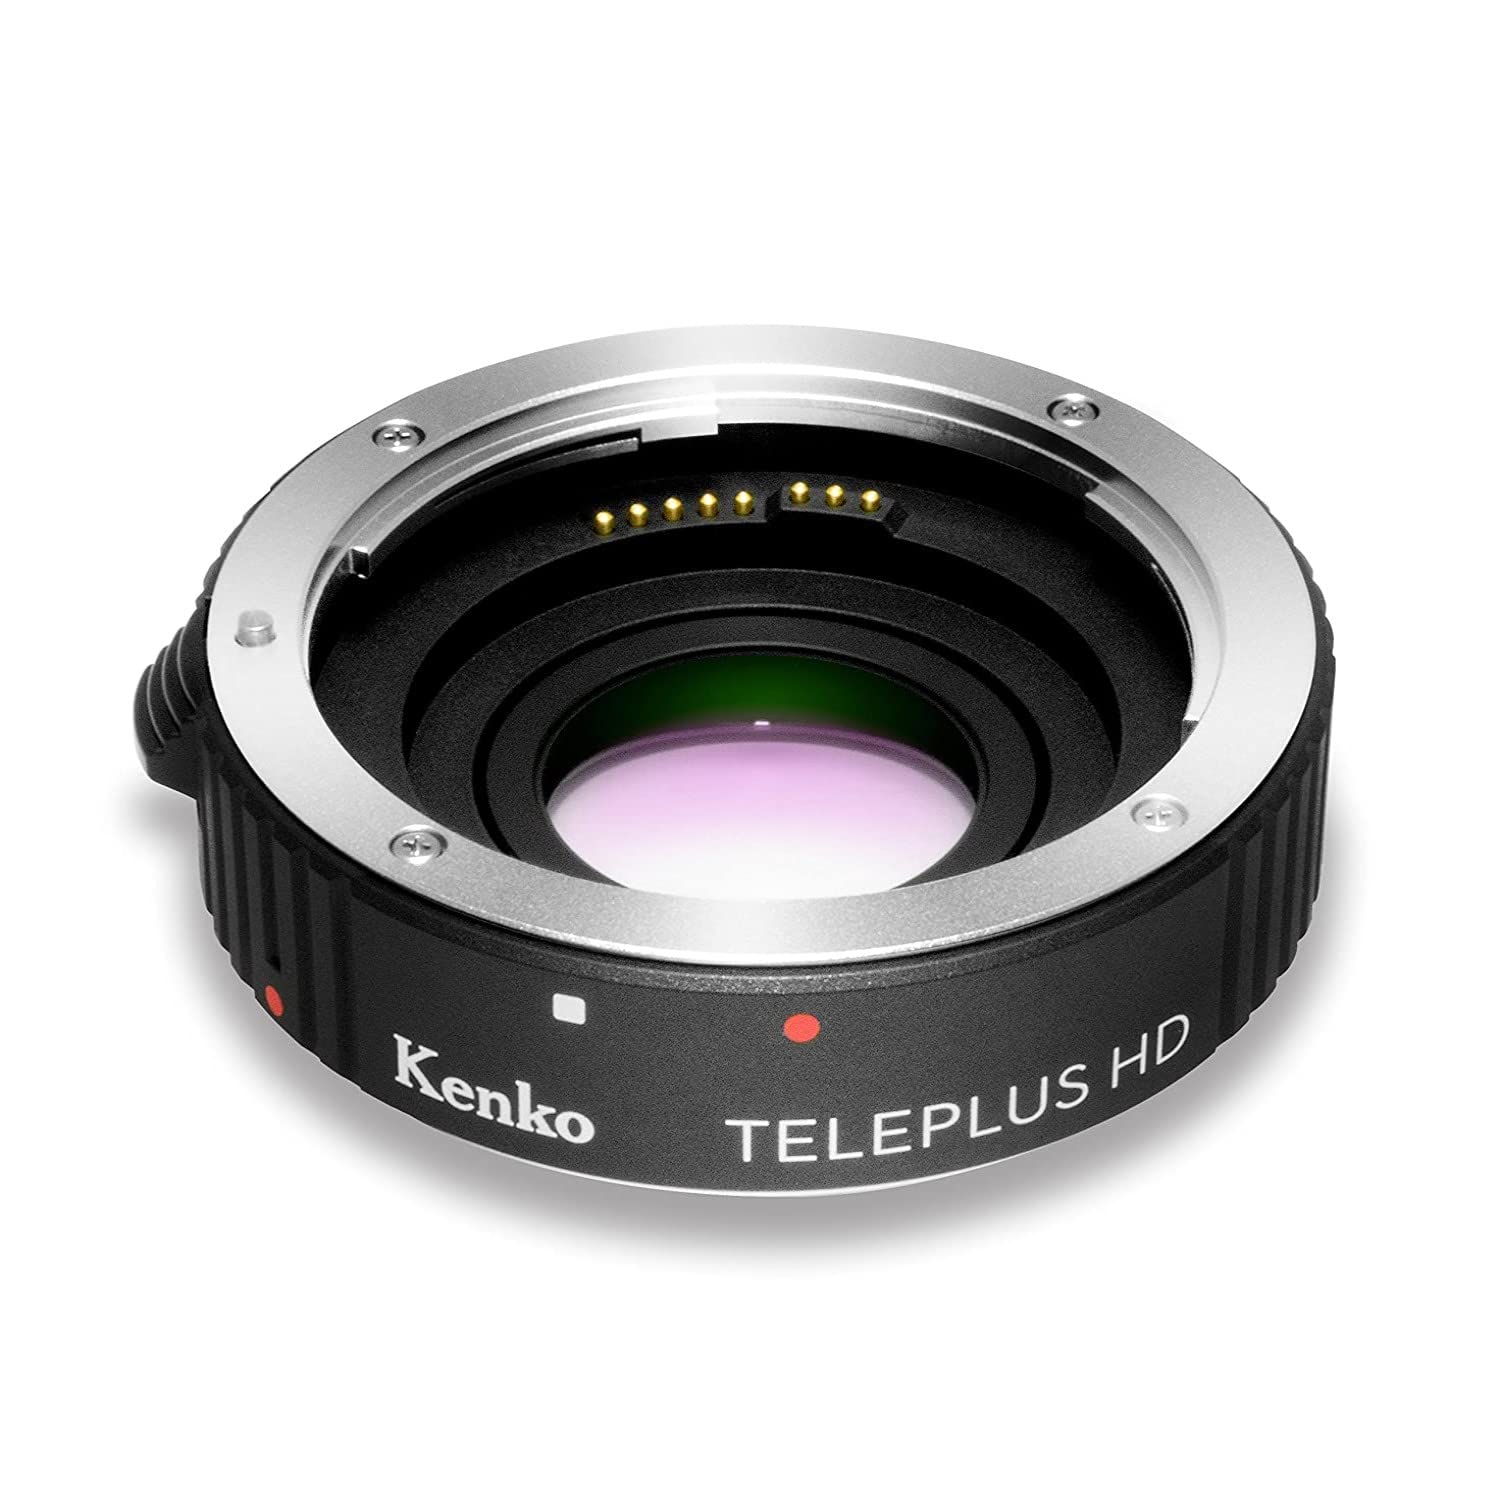 KENKO - Teleplus 1.4X HD DGX Teleconverter for Canon - Black